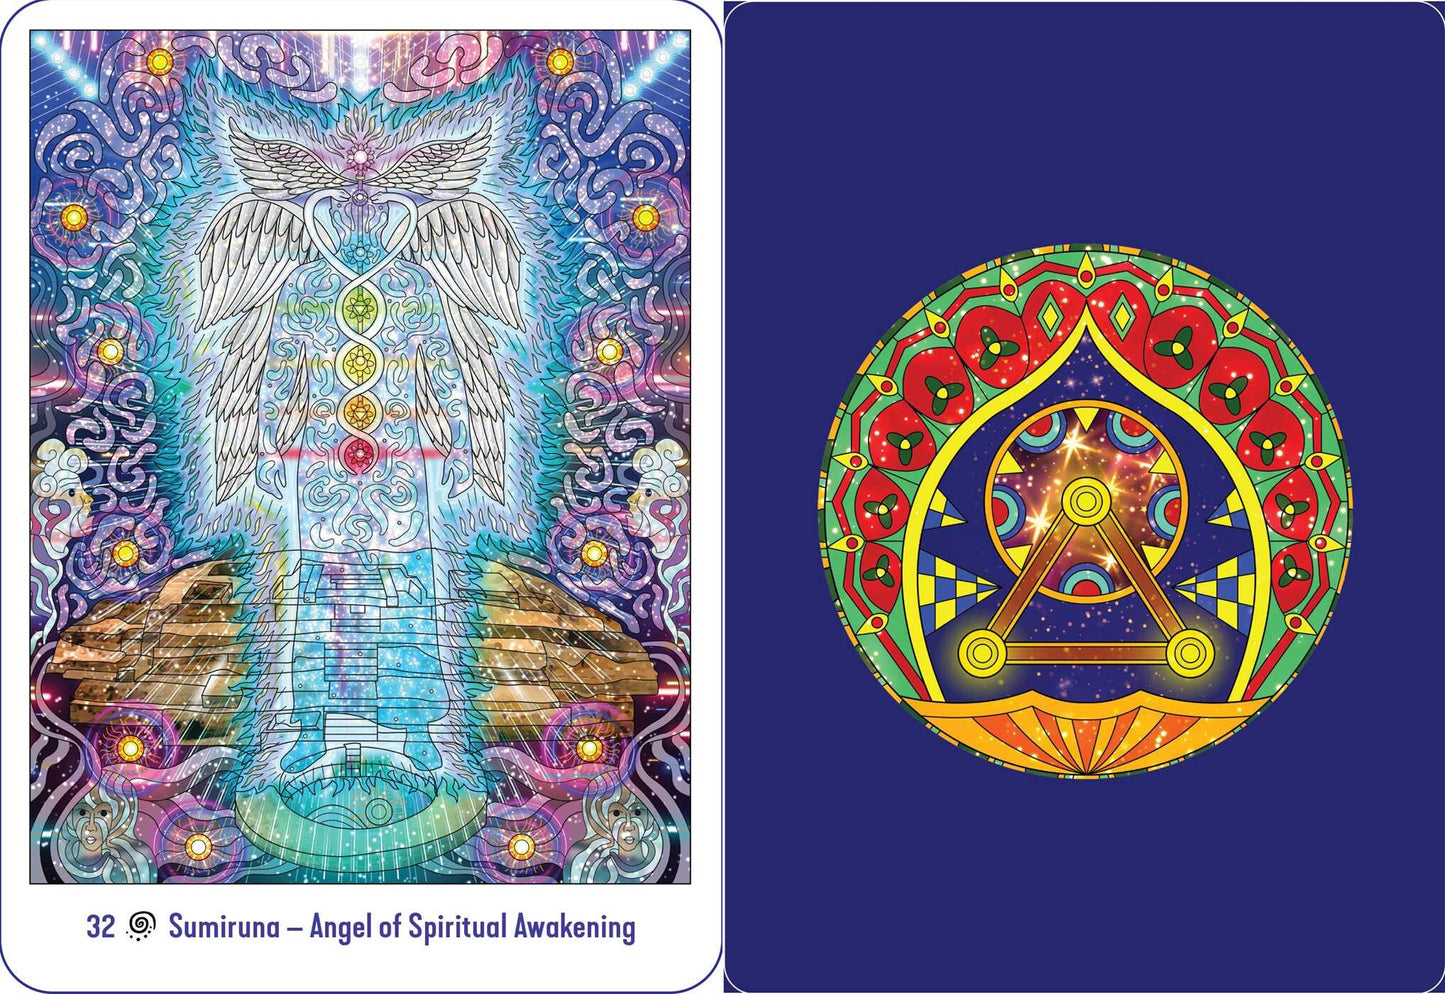 Sumiruna, Angel of Spiritual Awakening card & card back cover